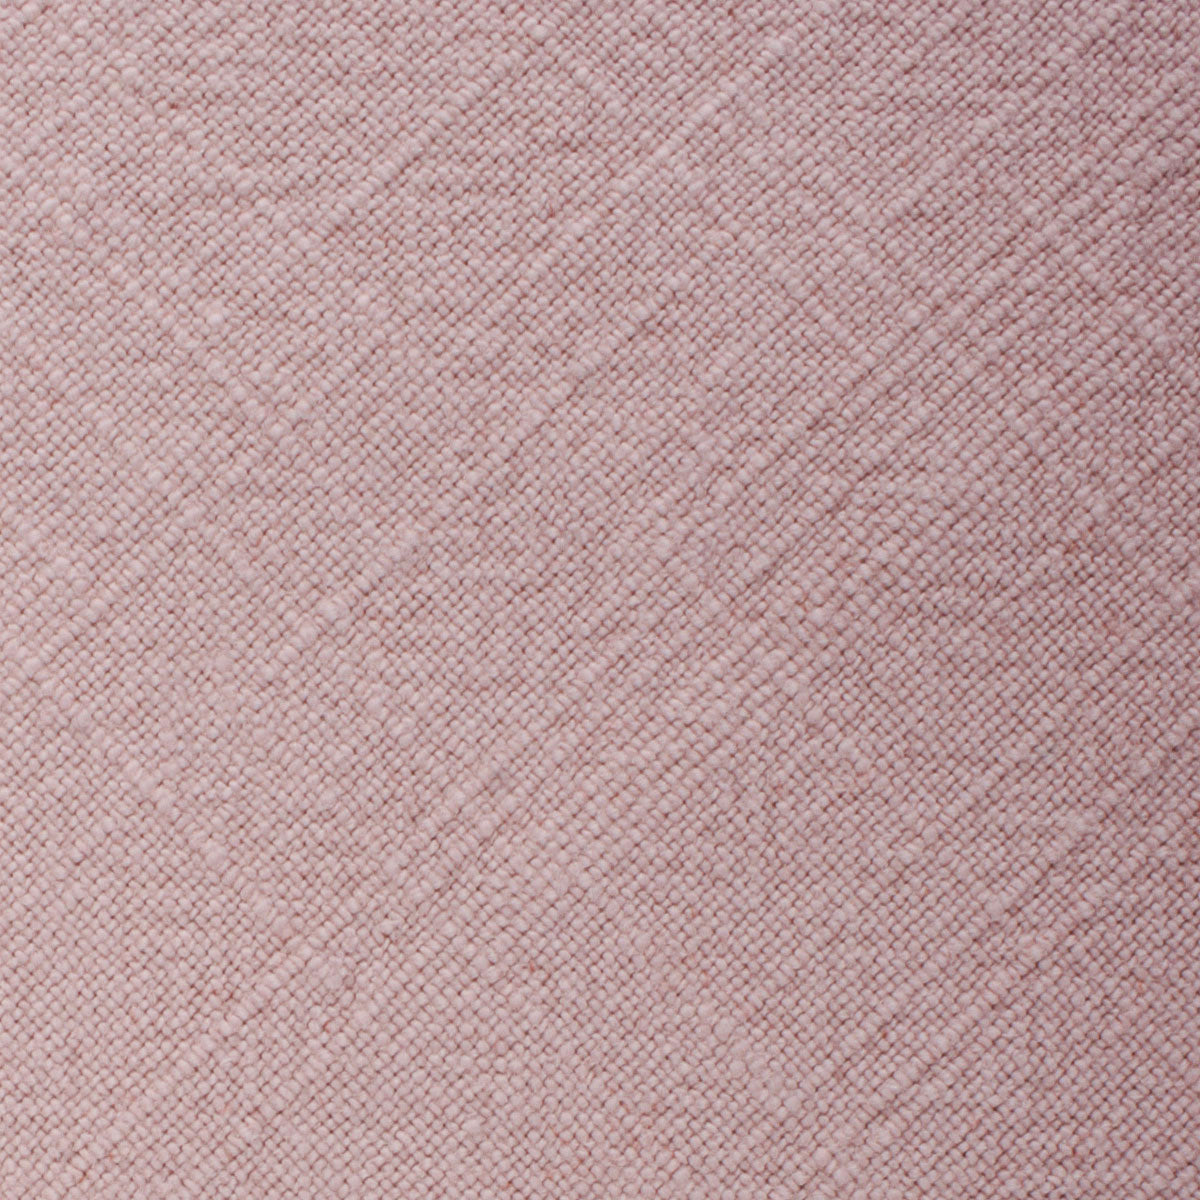 Dusty Rose Quartz Linen Fabric Swatch